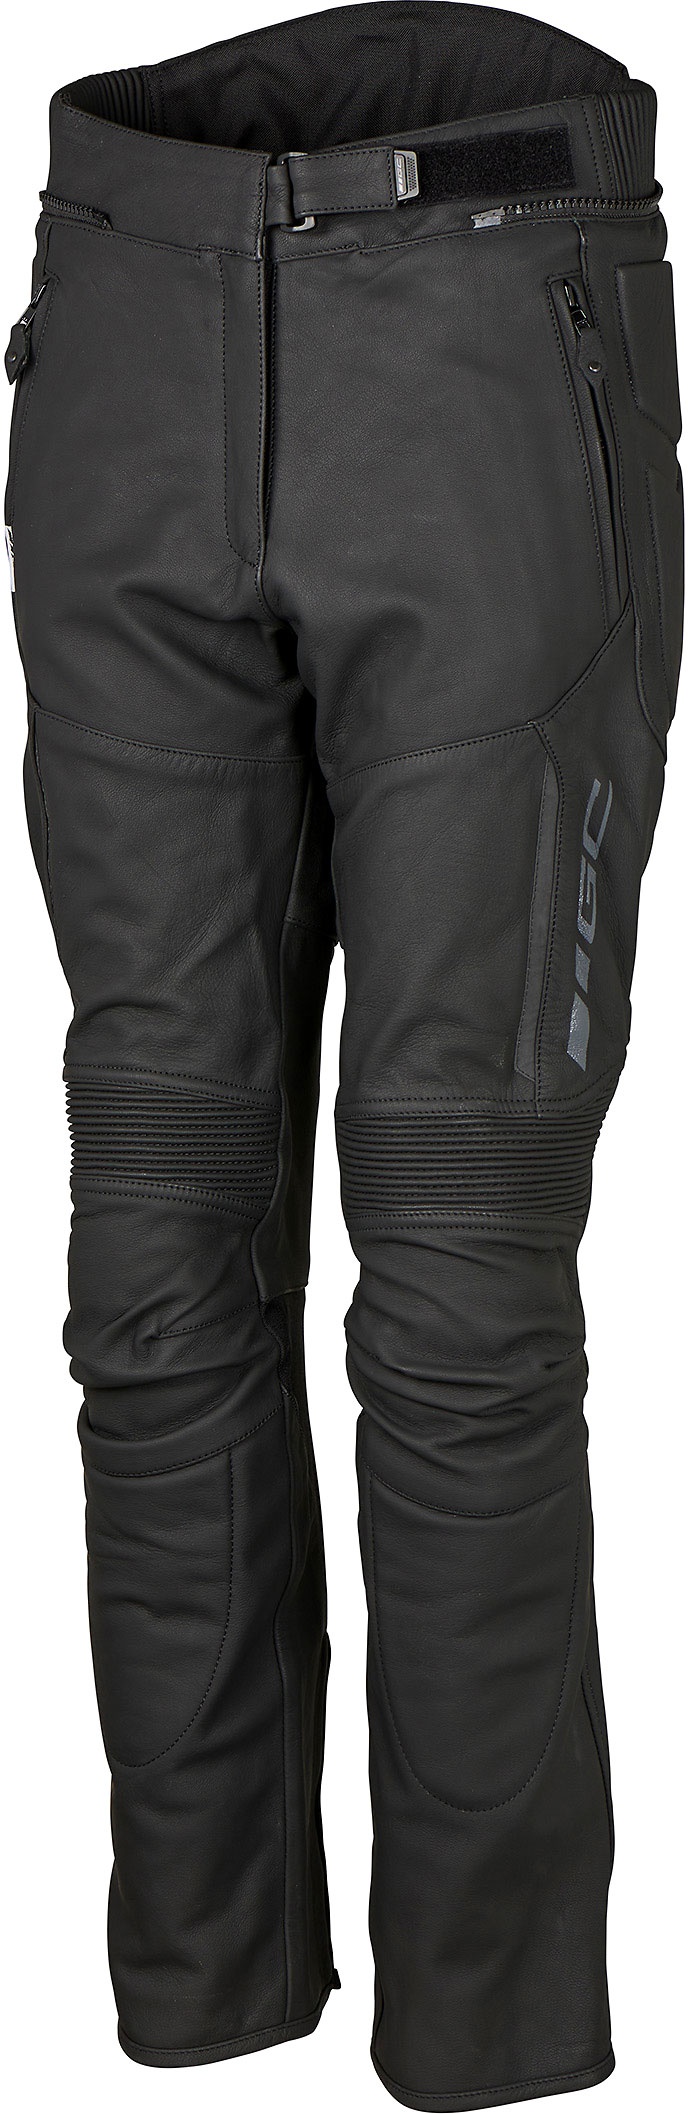 GC Bikewear Sienna, pantalon en cuir pour femmes - Noir - 36